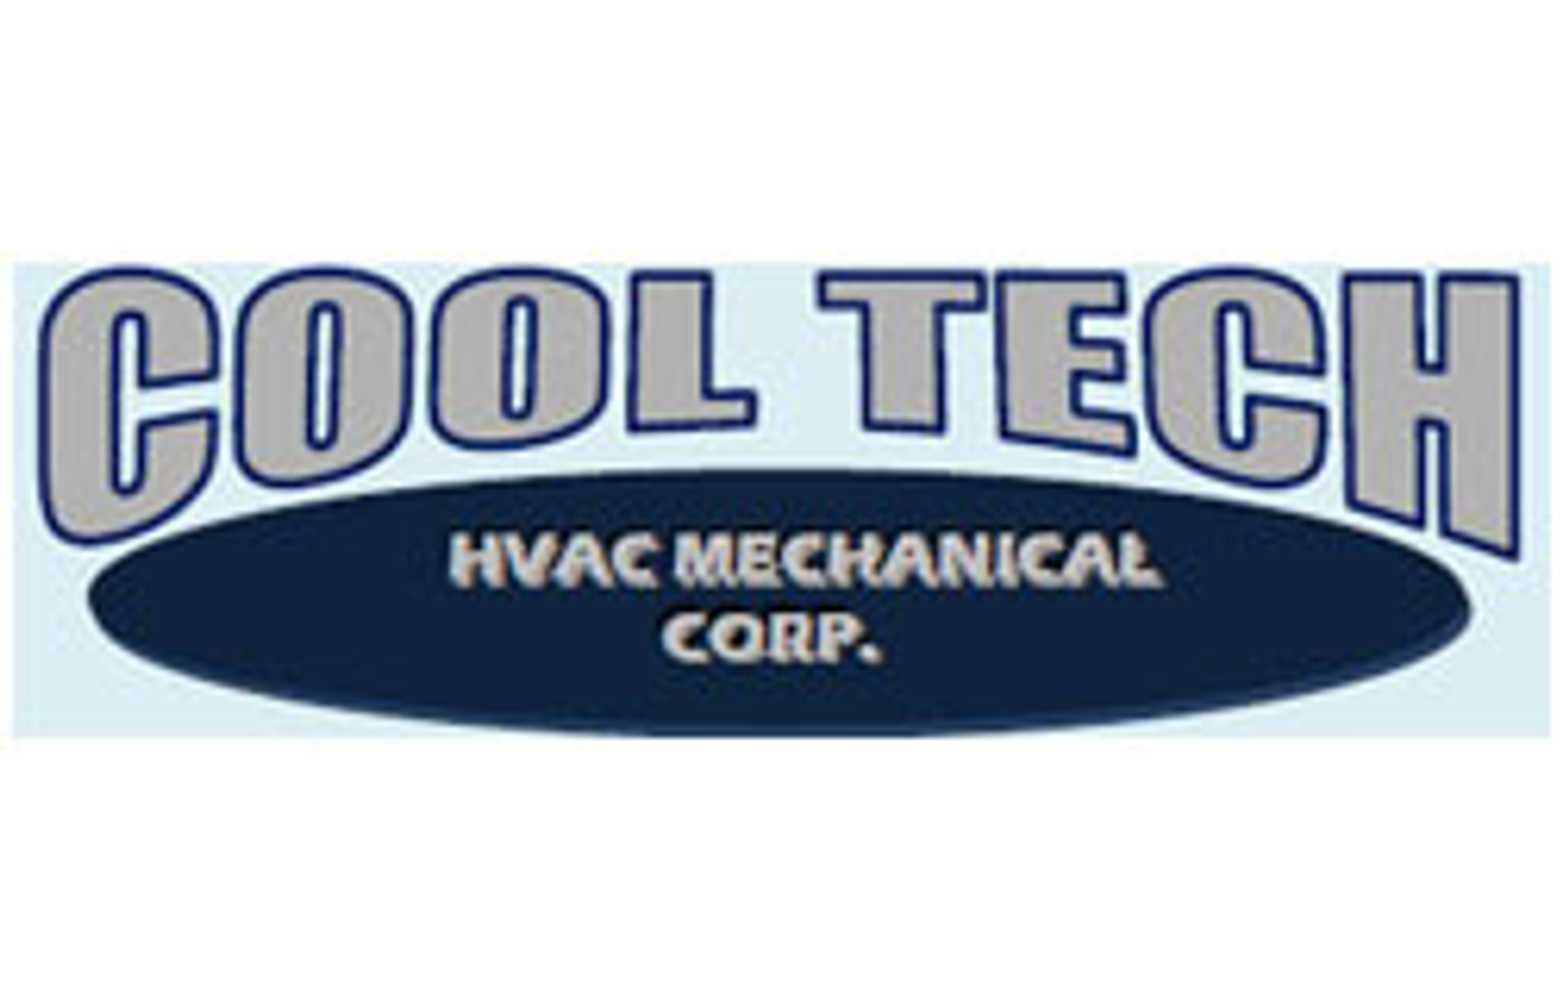 Photos from Cool Tech HVAC Mechanical Corp.